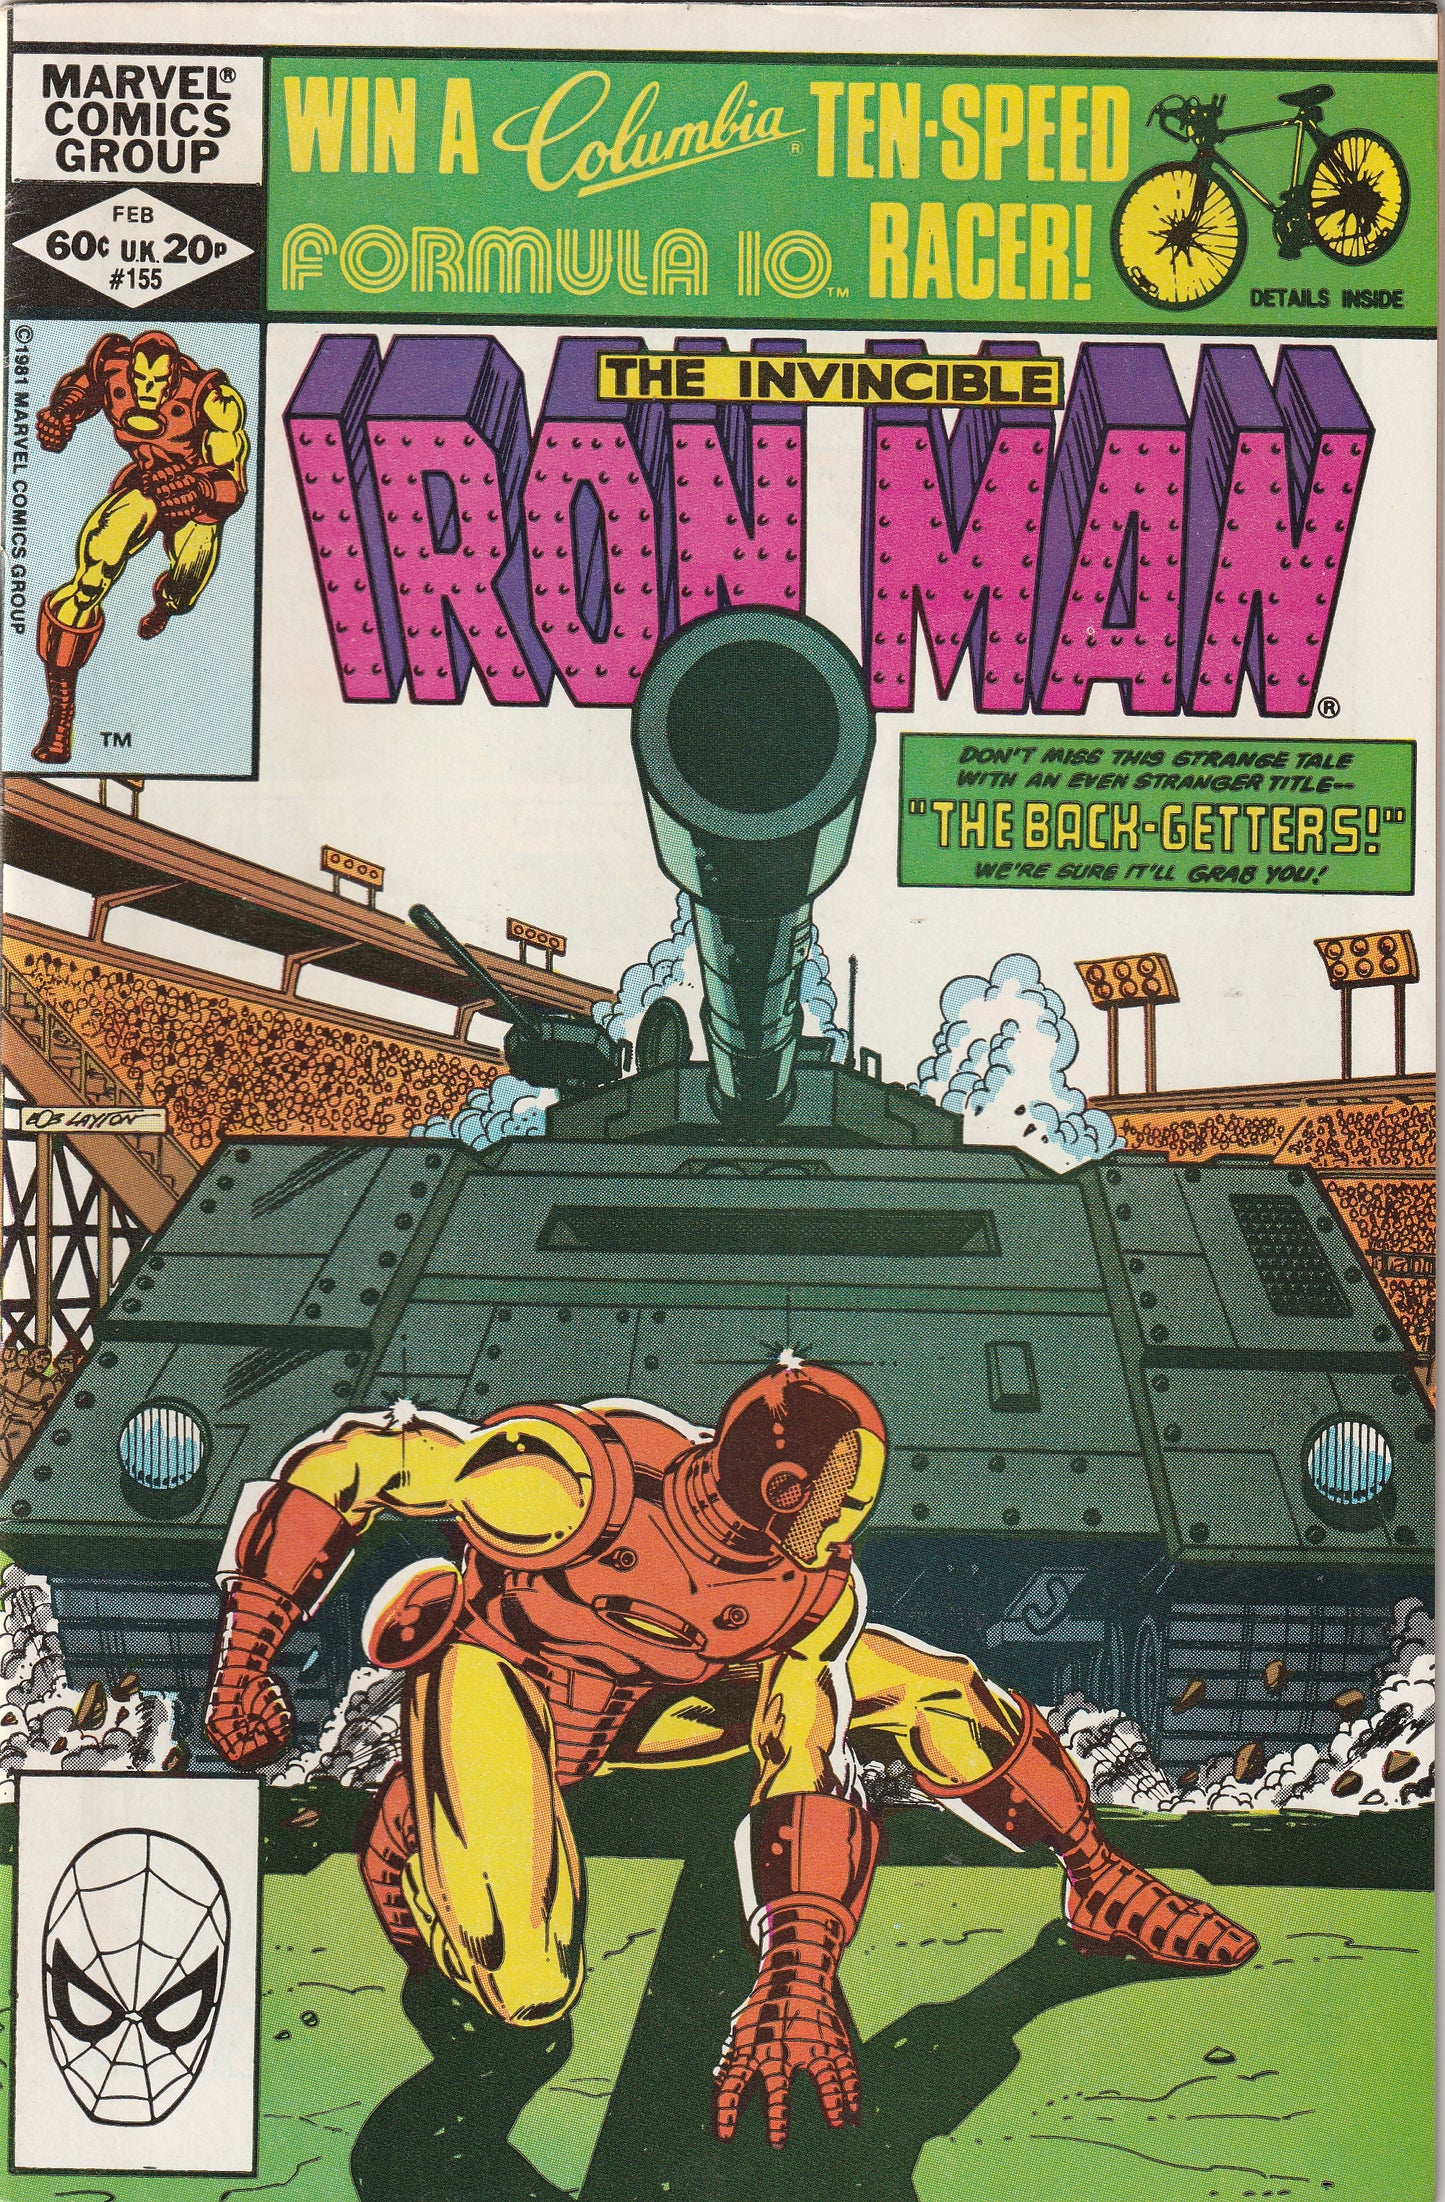 Iron Man #155 (1982)